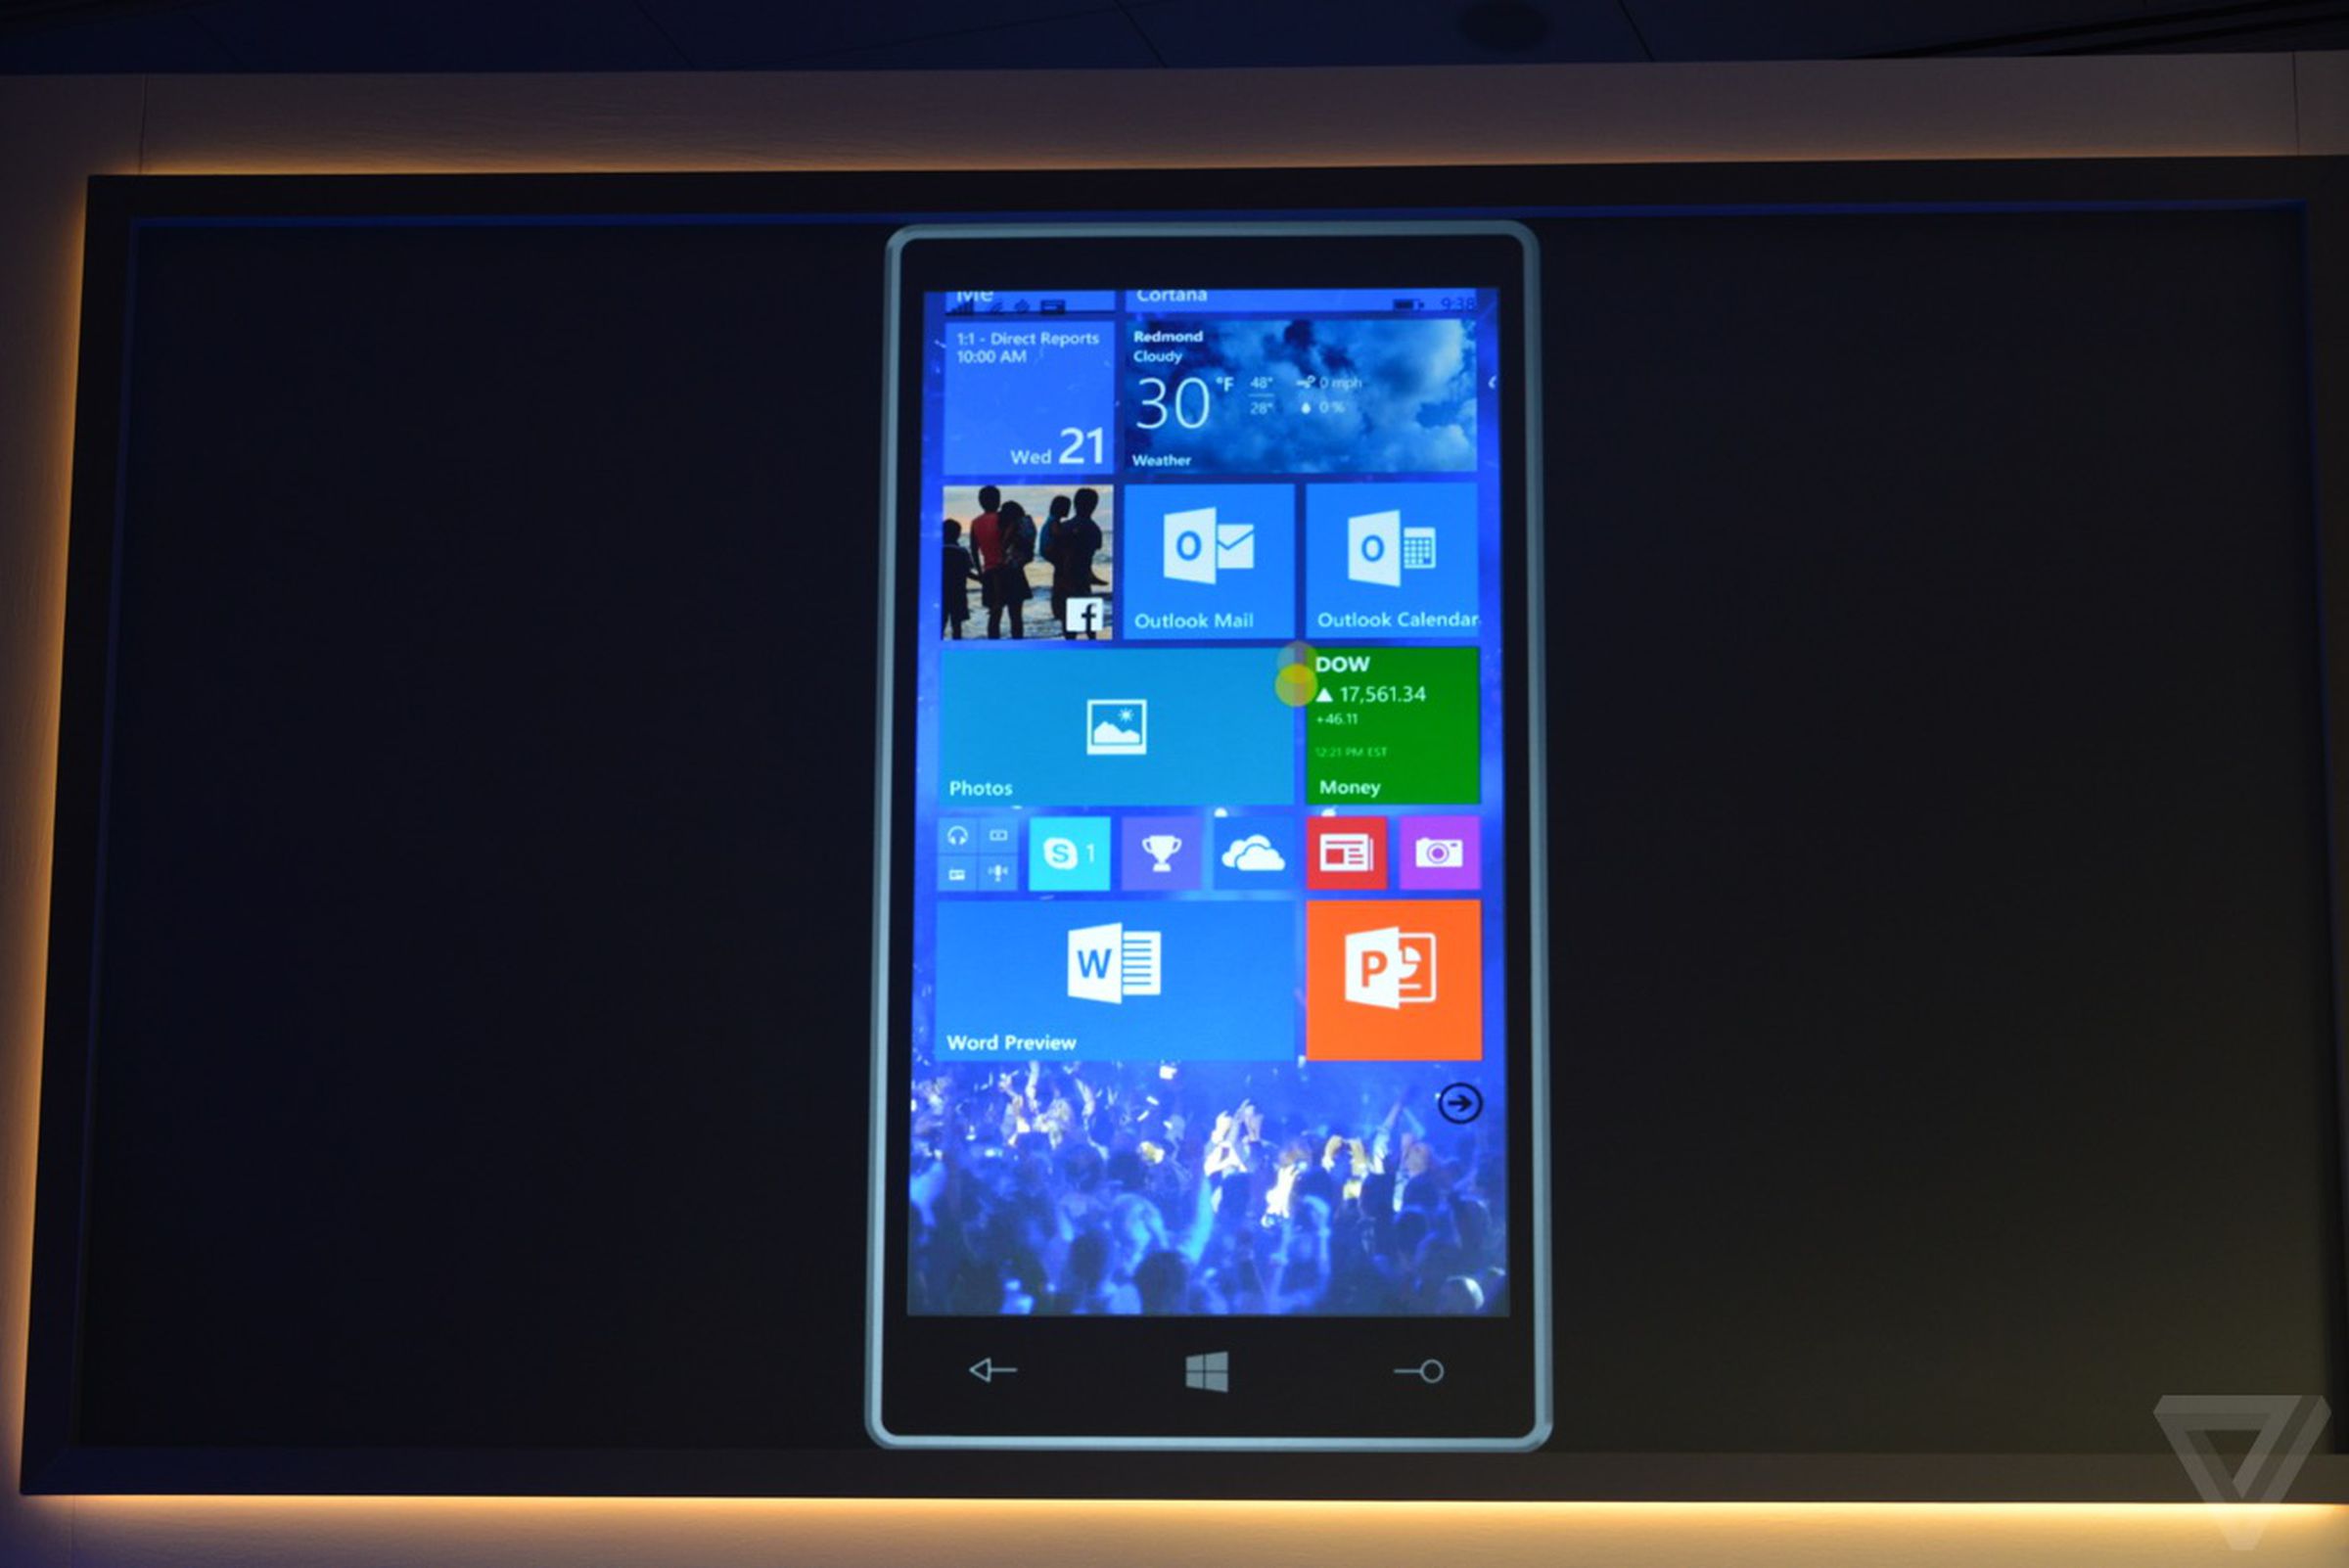 Windows 10 for phones in photos